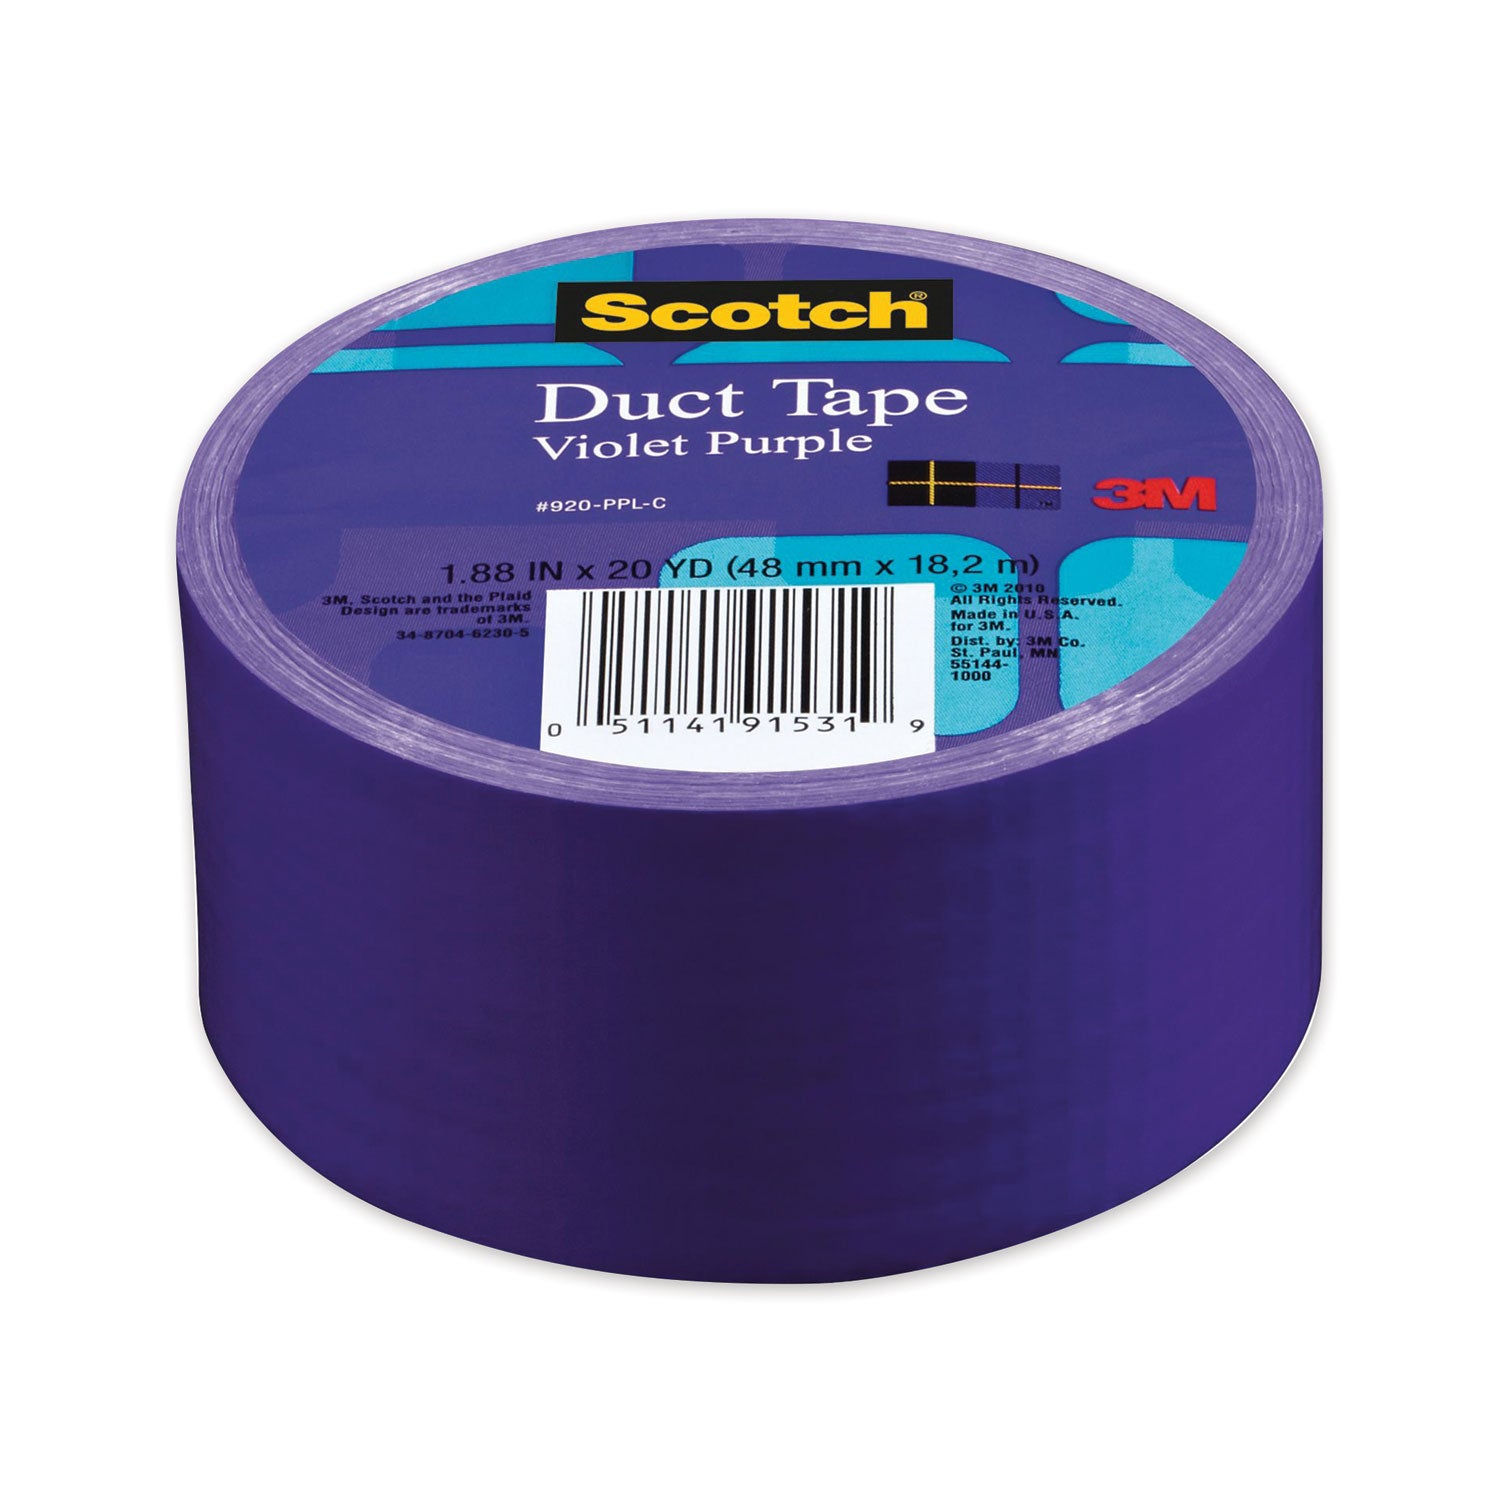 duct-tape-188-x-20-yds-violet-purple_mmm70005059251 - 1